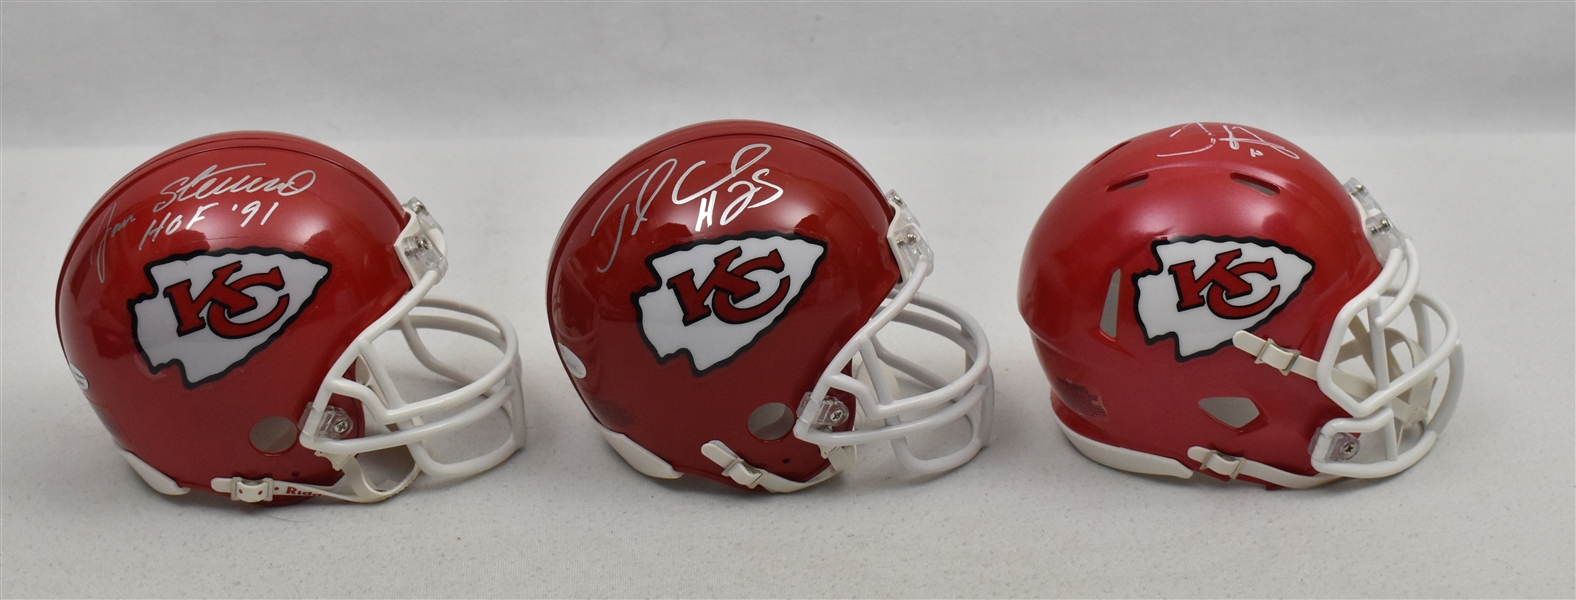 Kansas City Chiefs Lot of 3 Autographed Mini Helmets w/Tyreke Hill Jan Stenerud & Jamal Charles